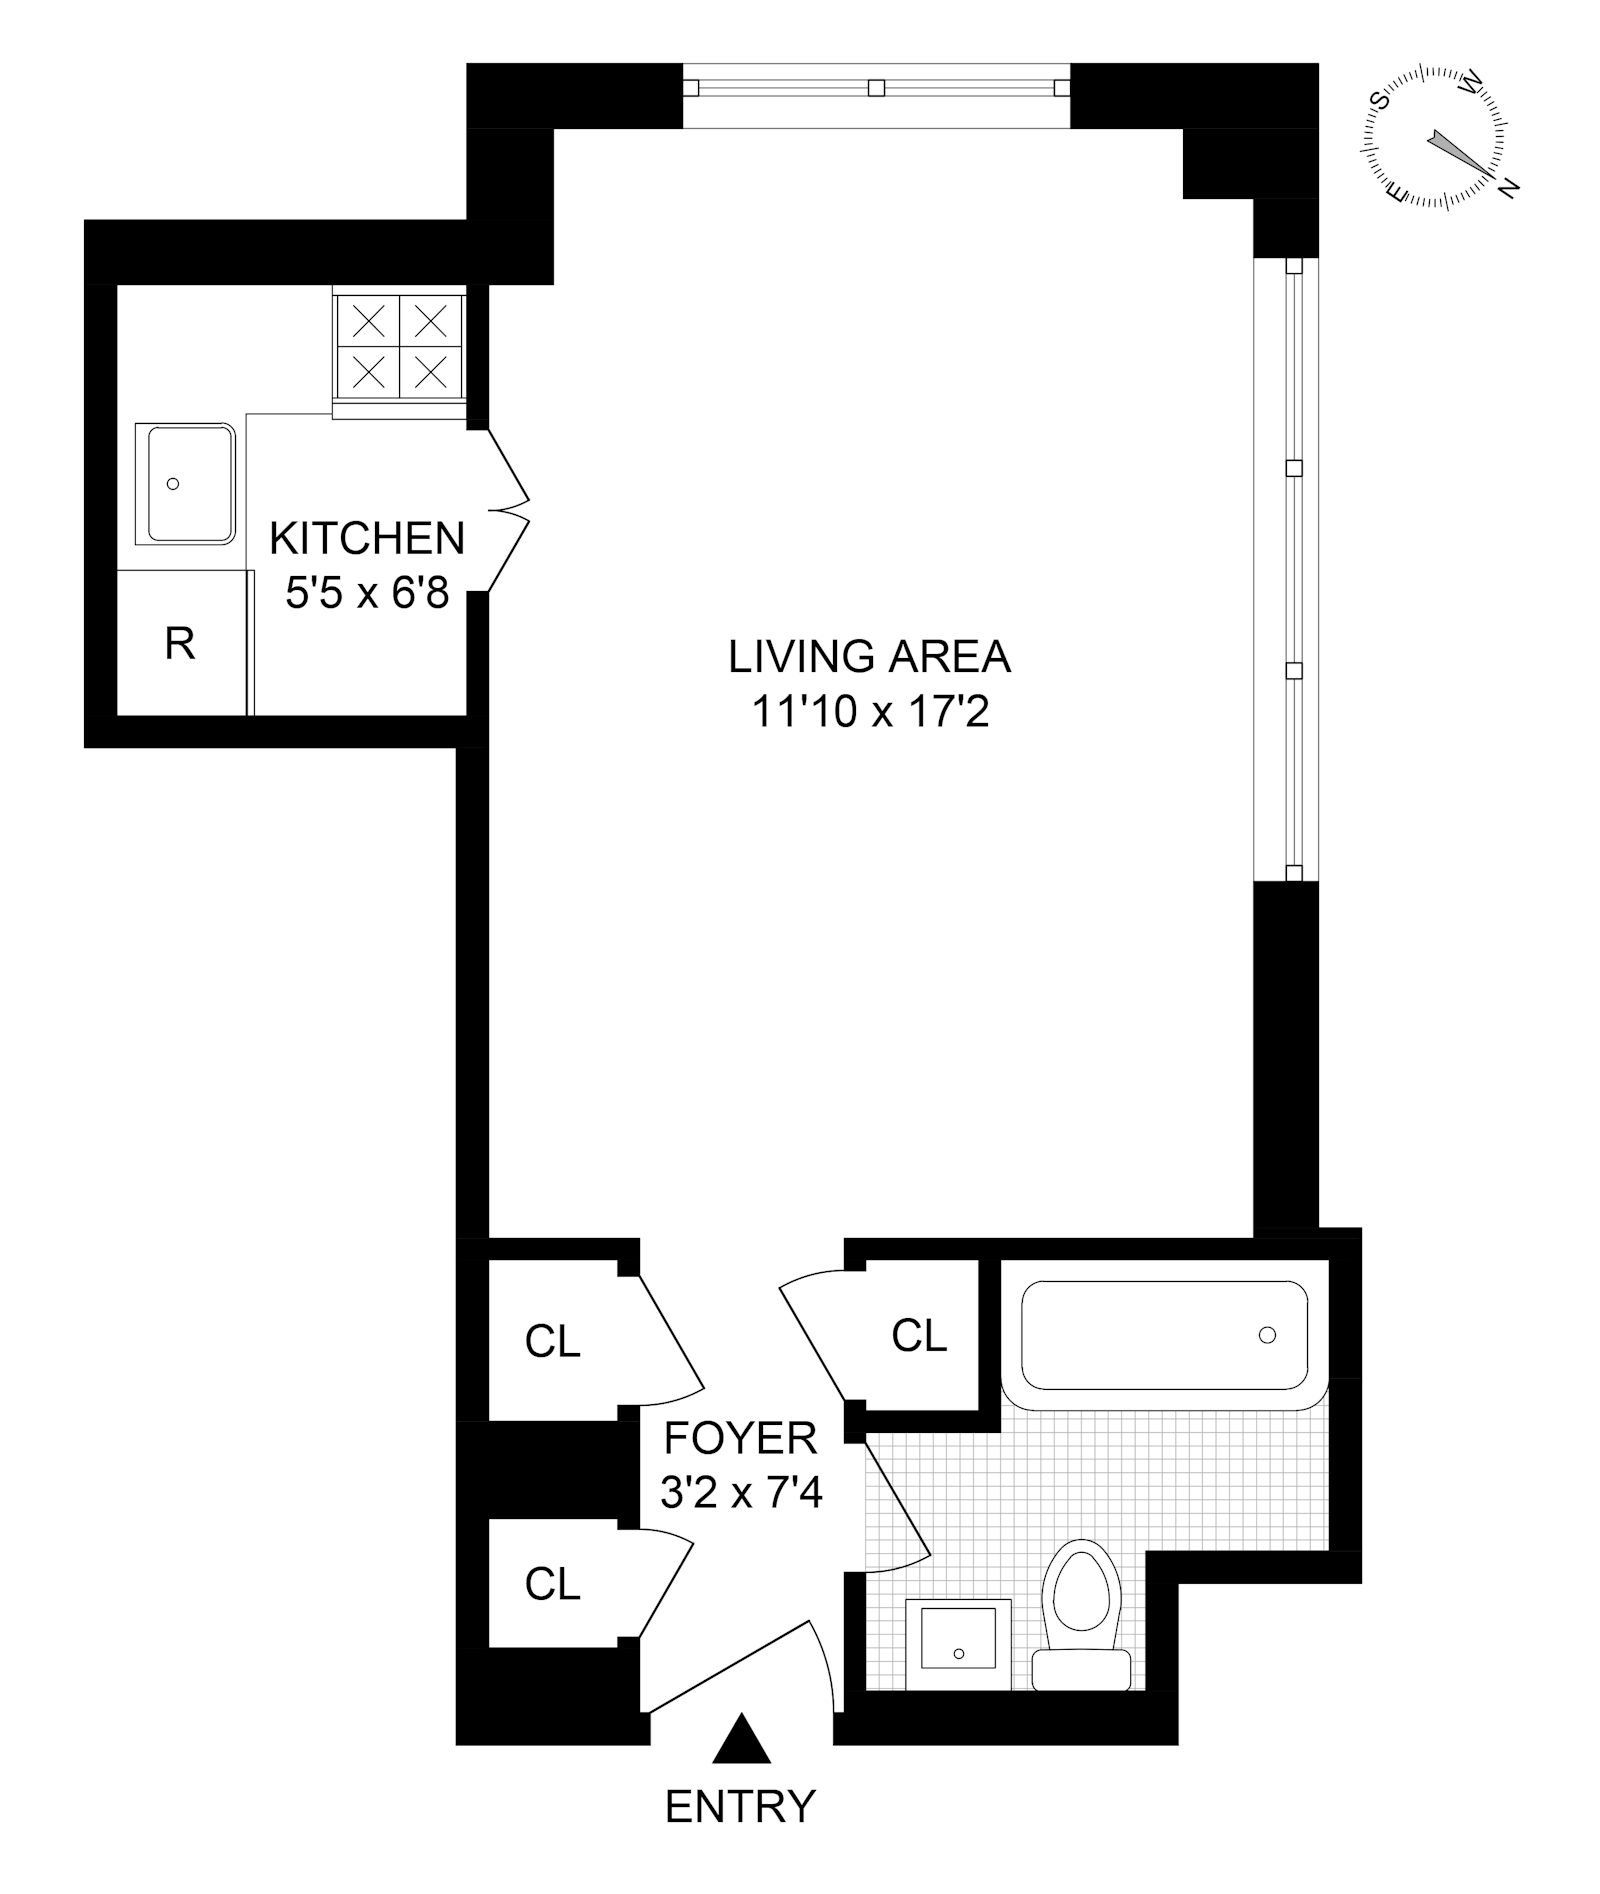 Floorplan for 166 East 35th Street, 16A